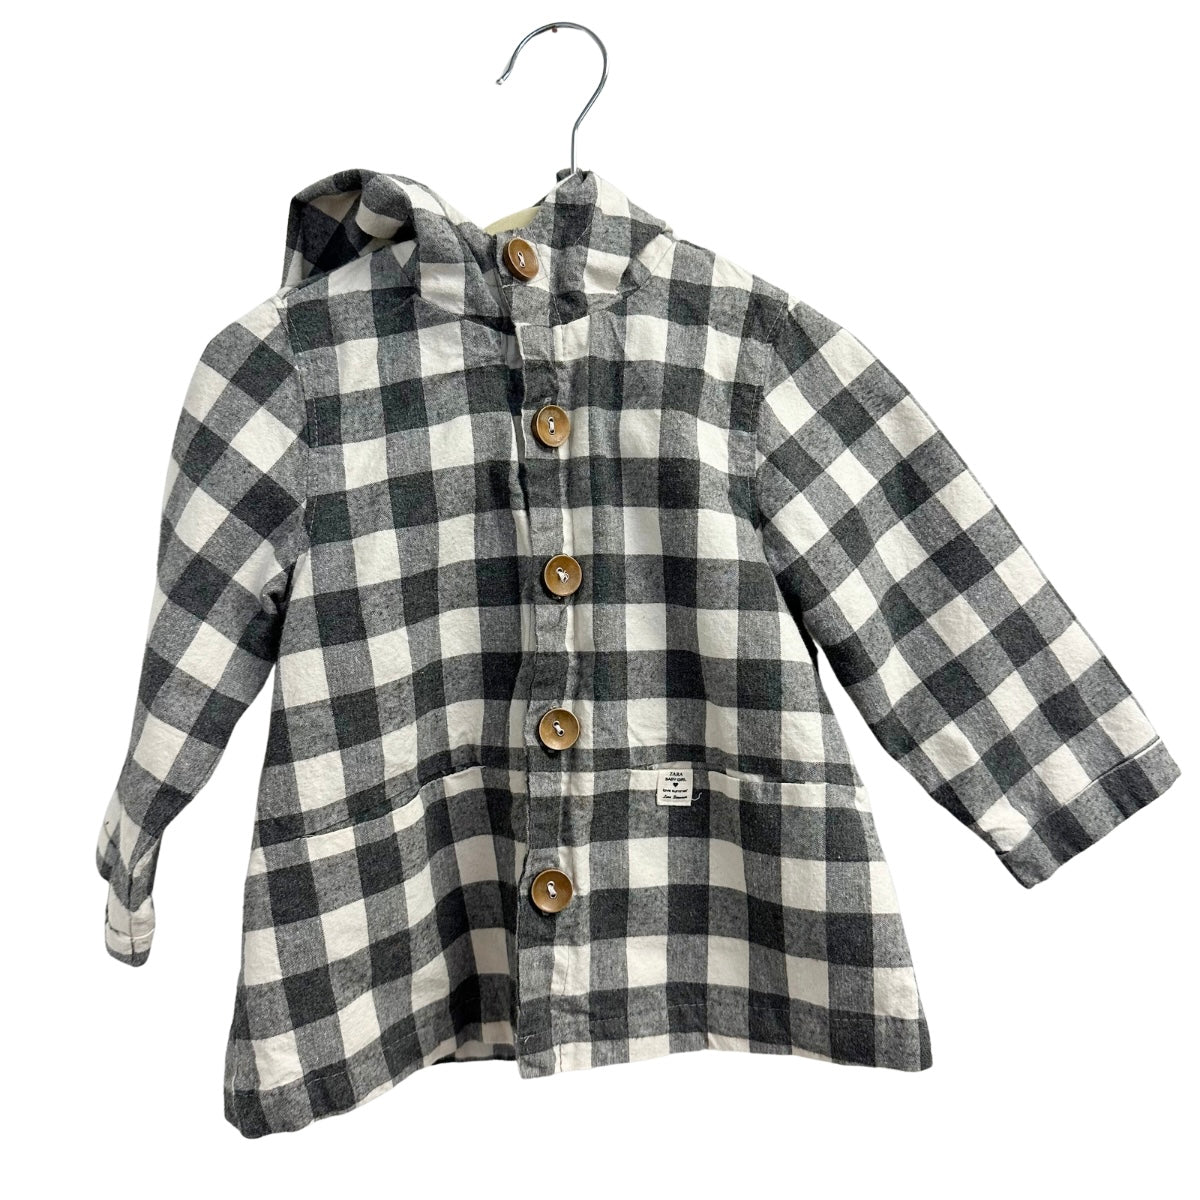 Zara Checkered Spring Jacket